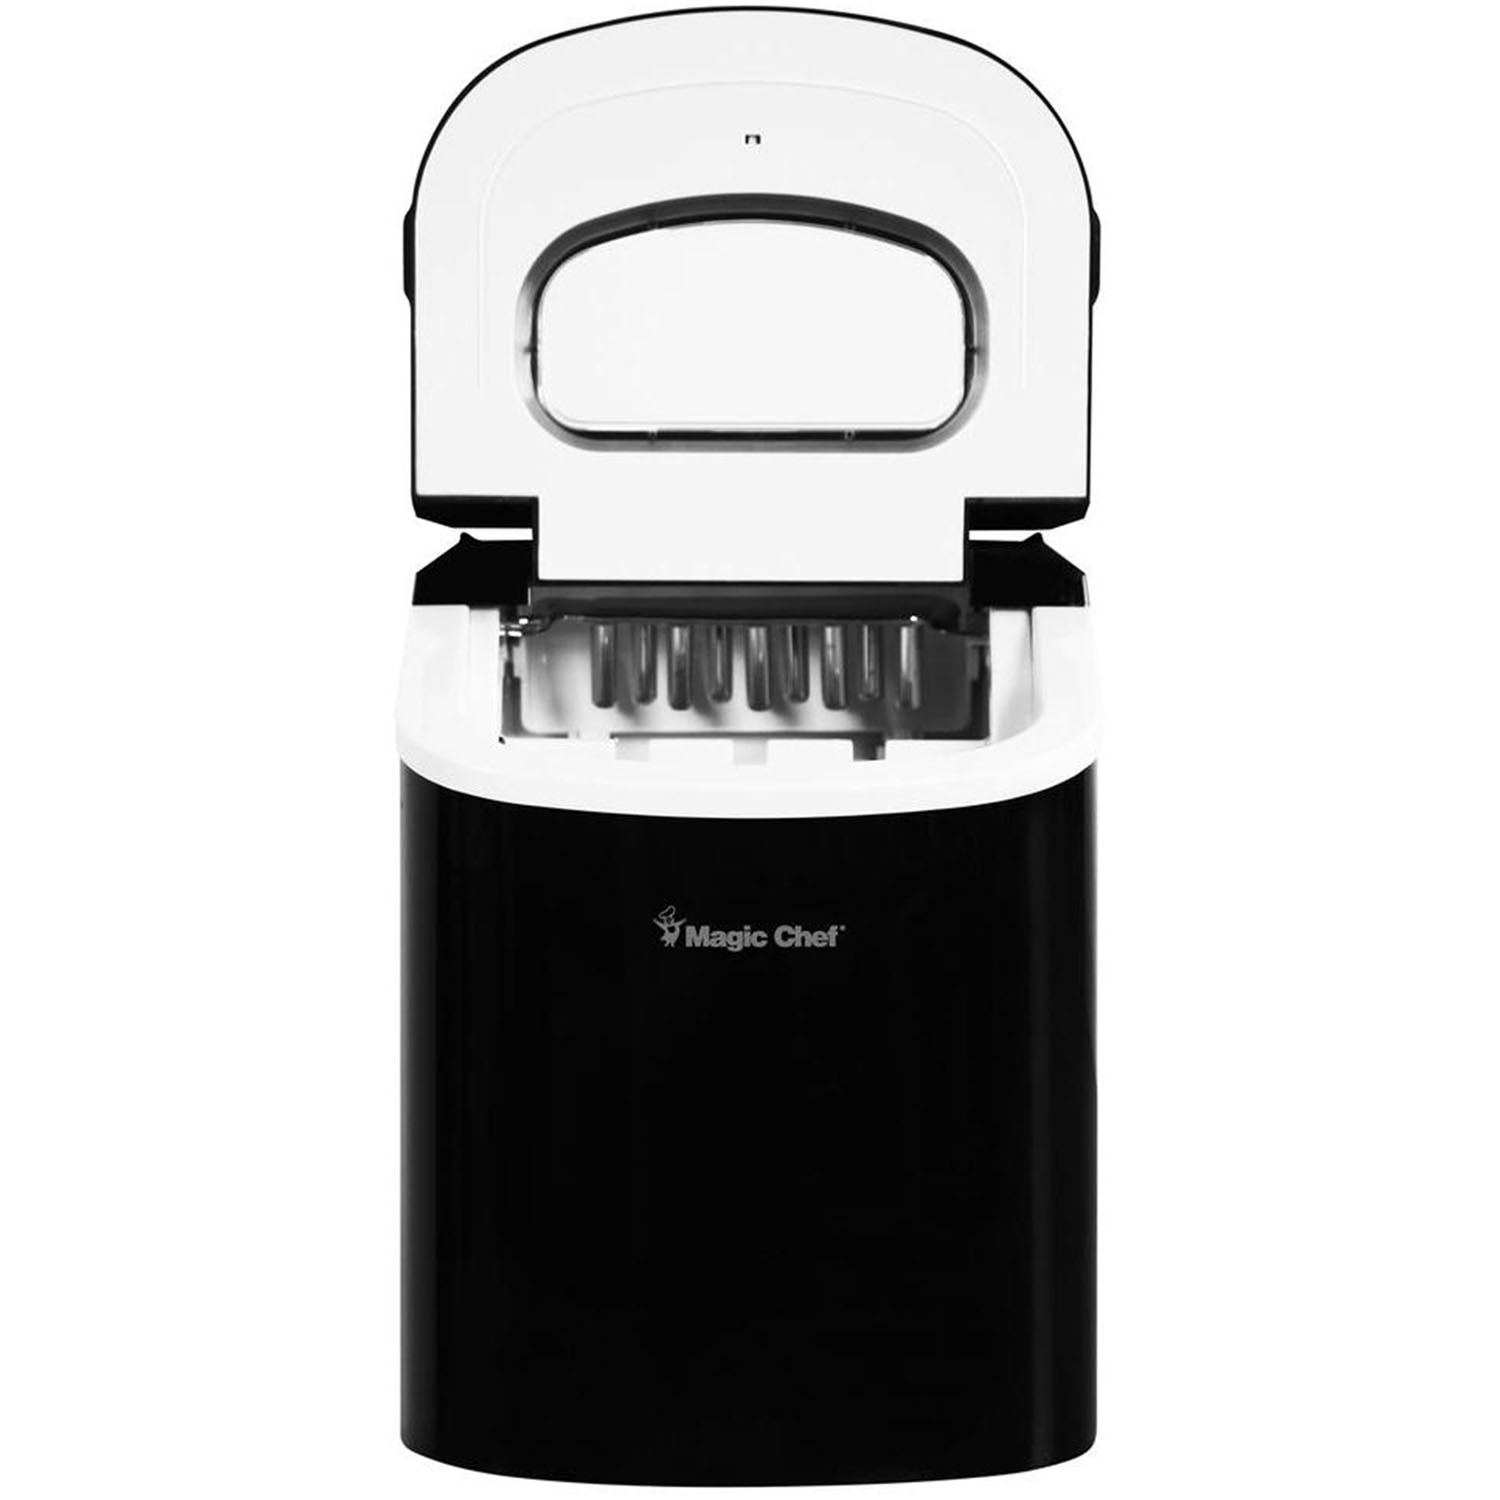 Magic Chef 27 lb. Capacity Portable Countertop Ice Maker, Black (Bullet Ice) - image 4 of 8